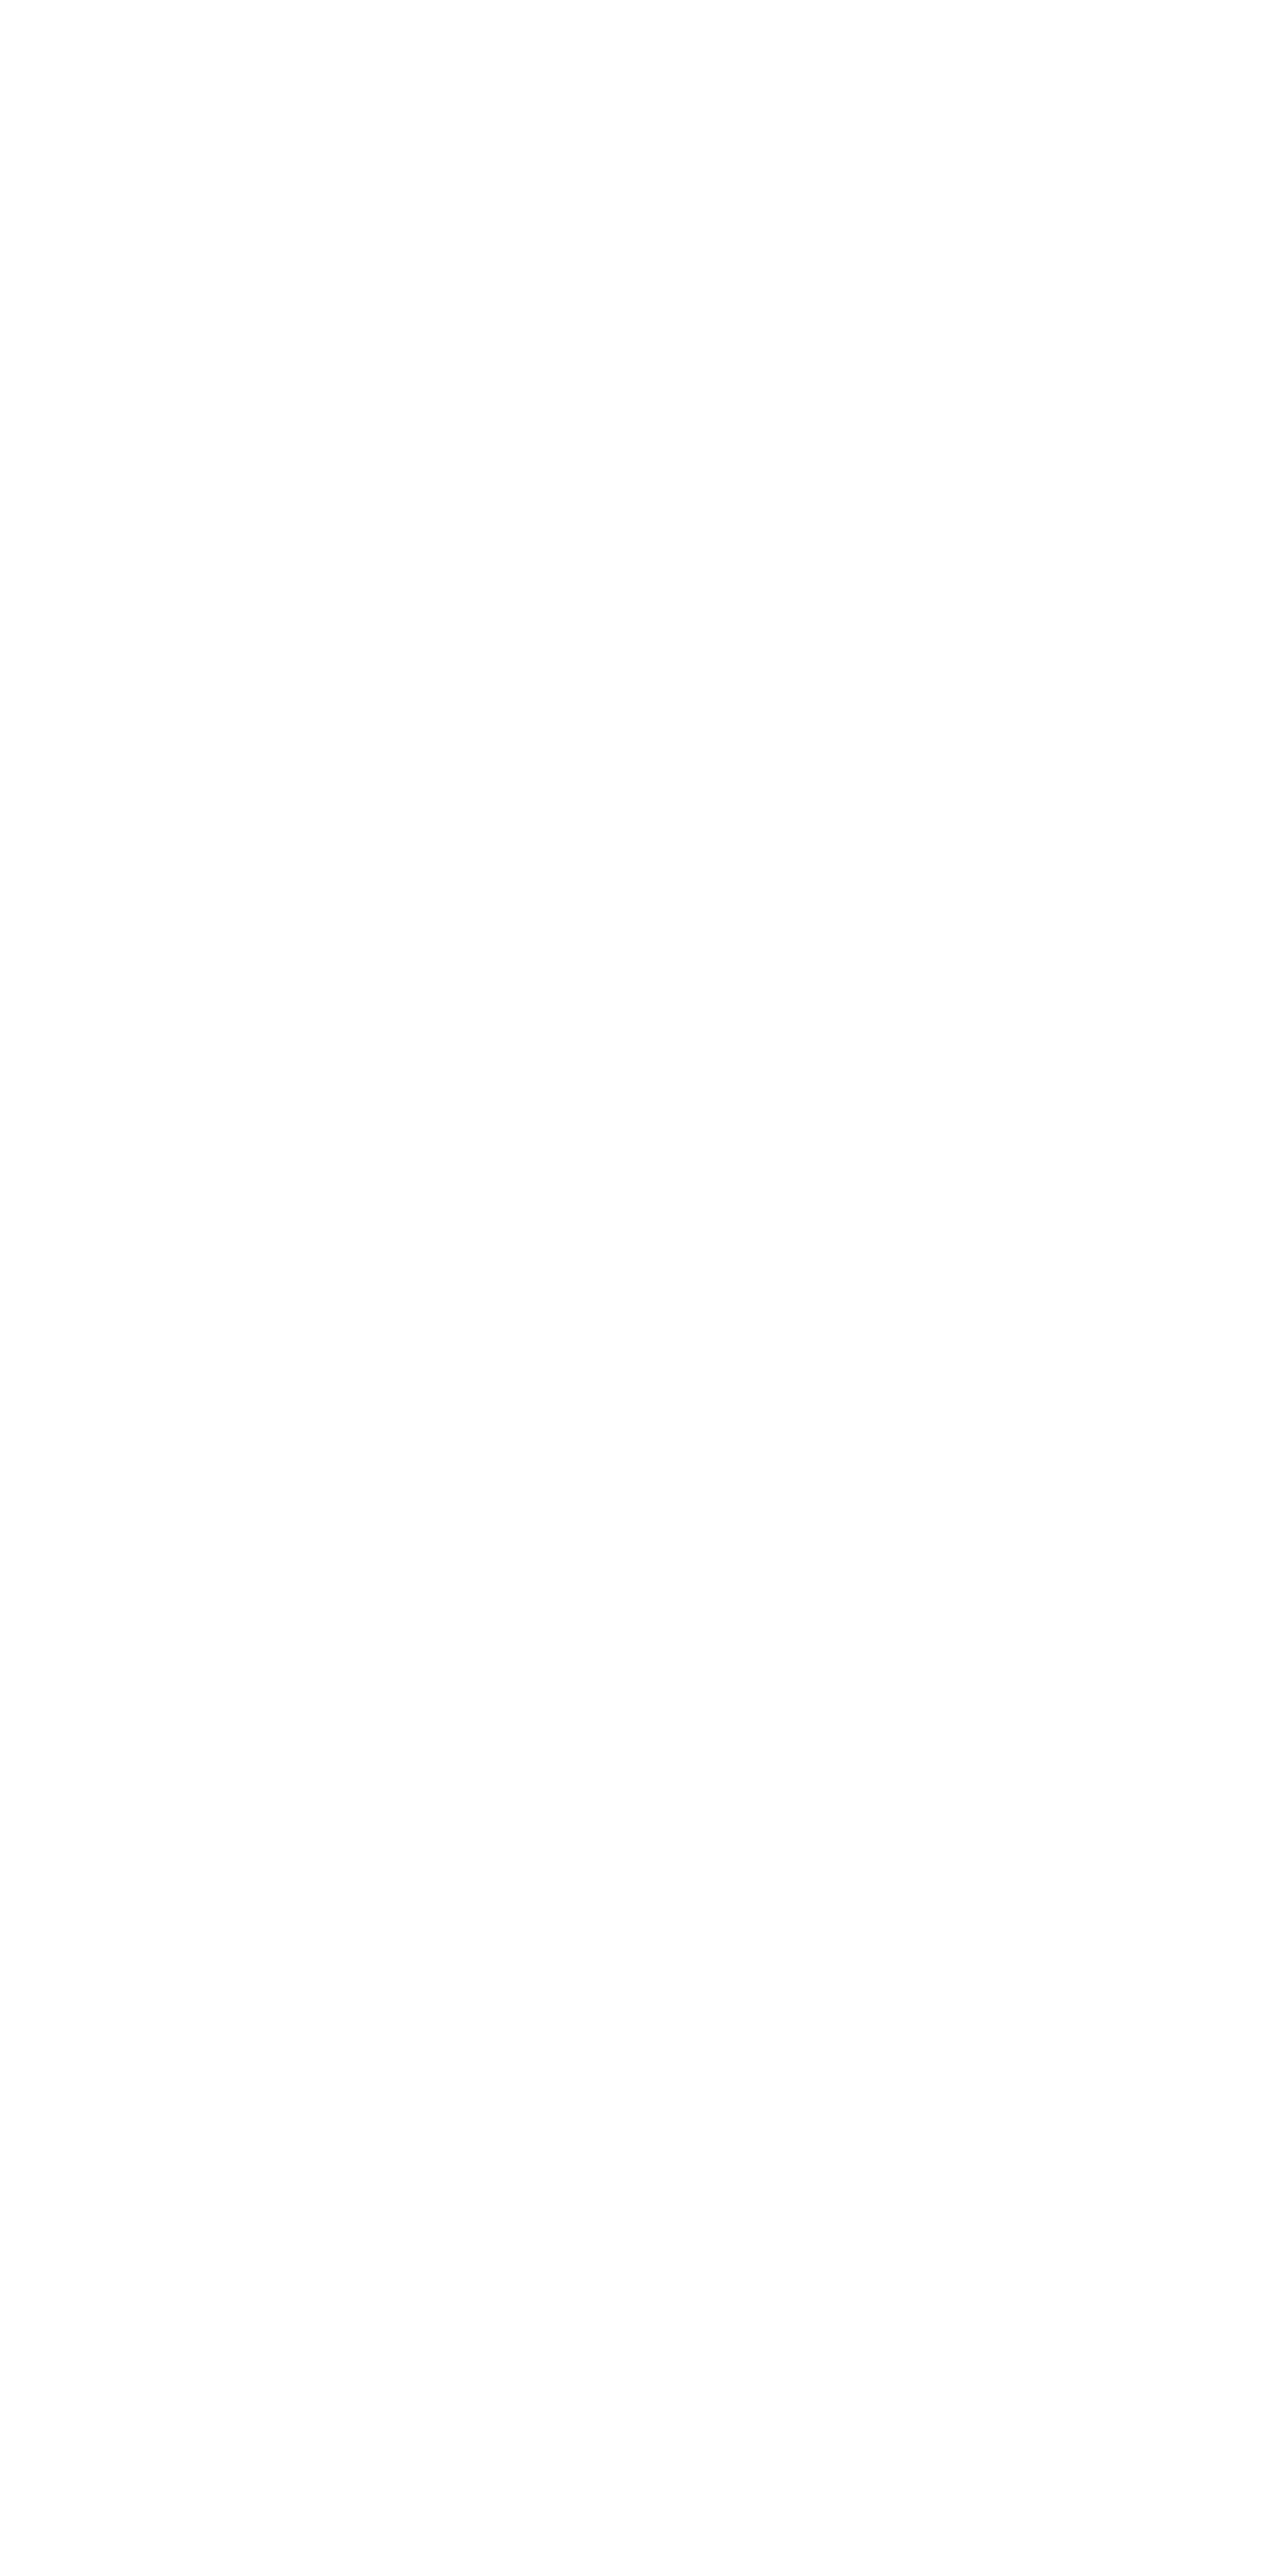 The Lutheran Church of Arcata